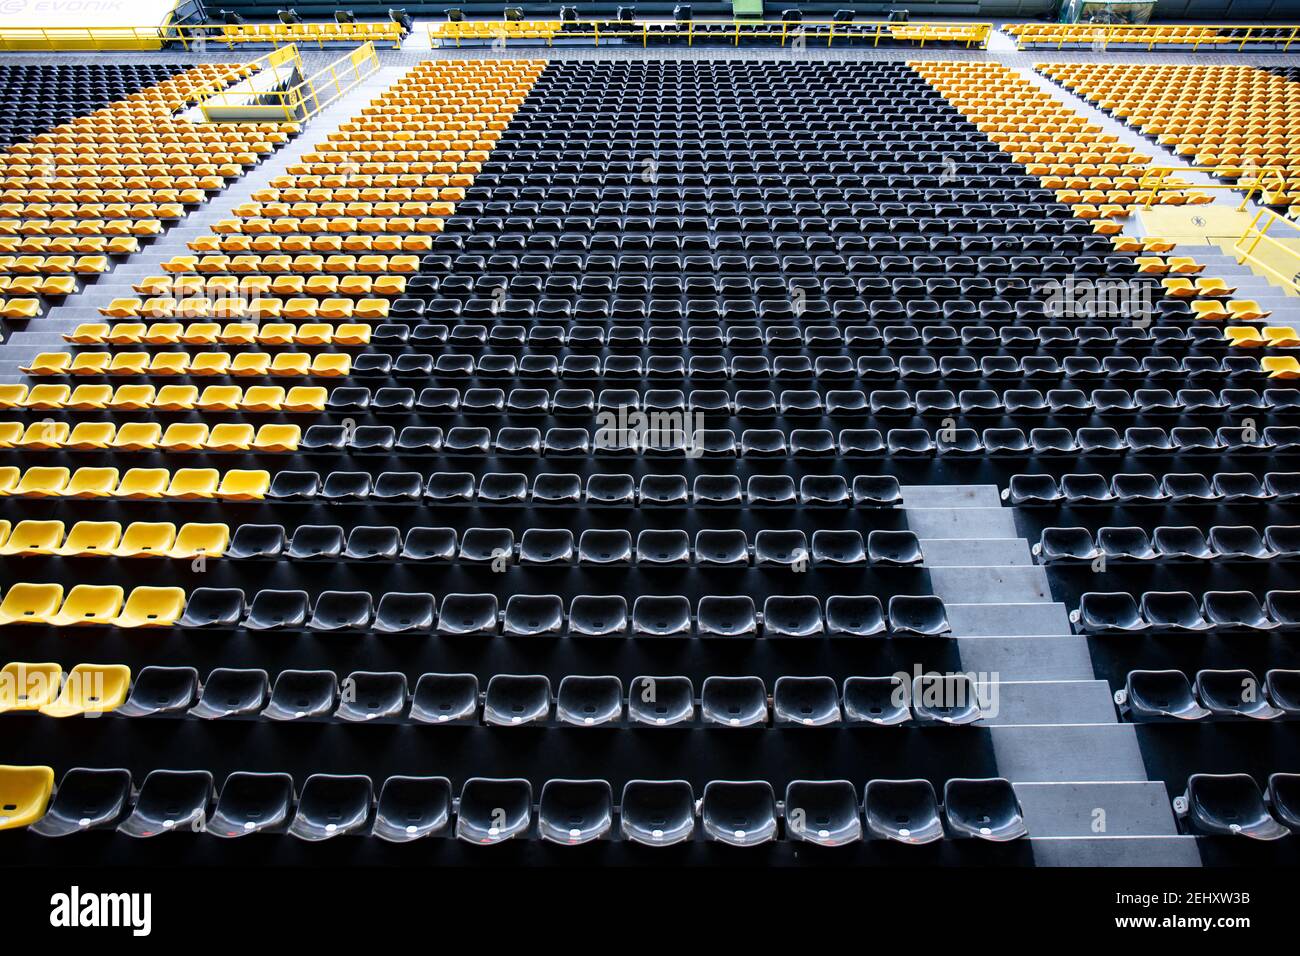 Leere Plätze eines leeren Fußballstadions Stockfoto